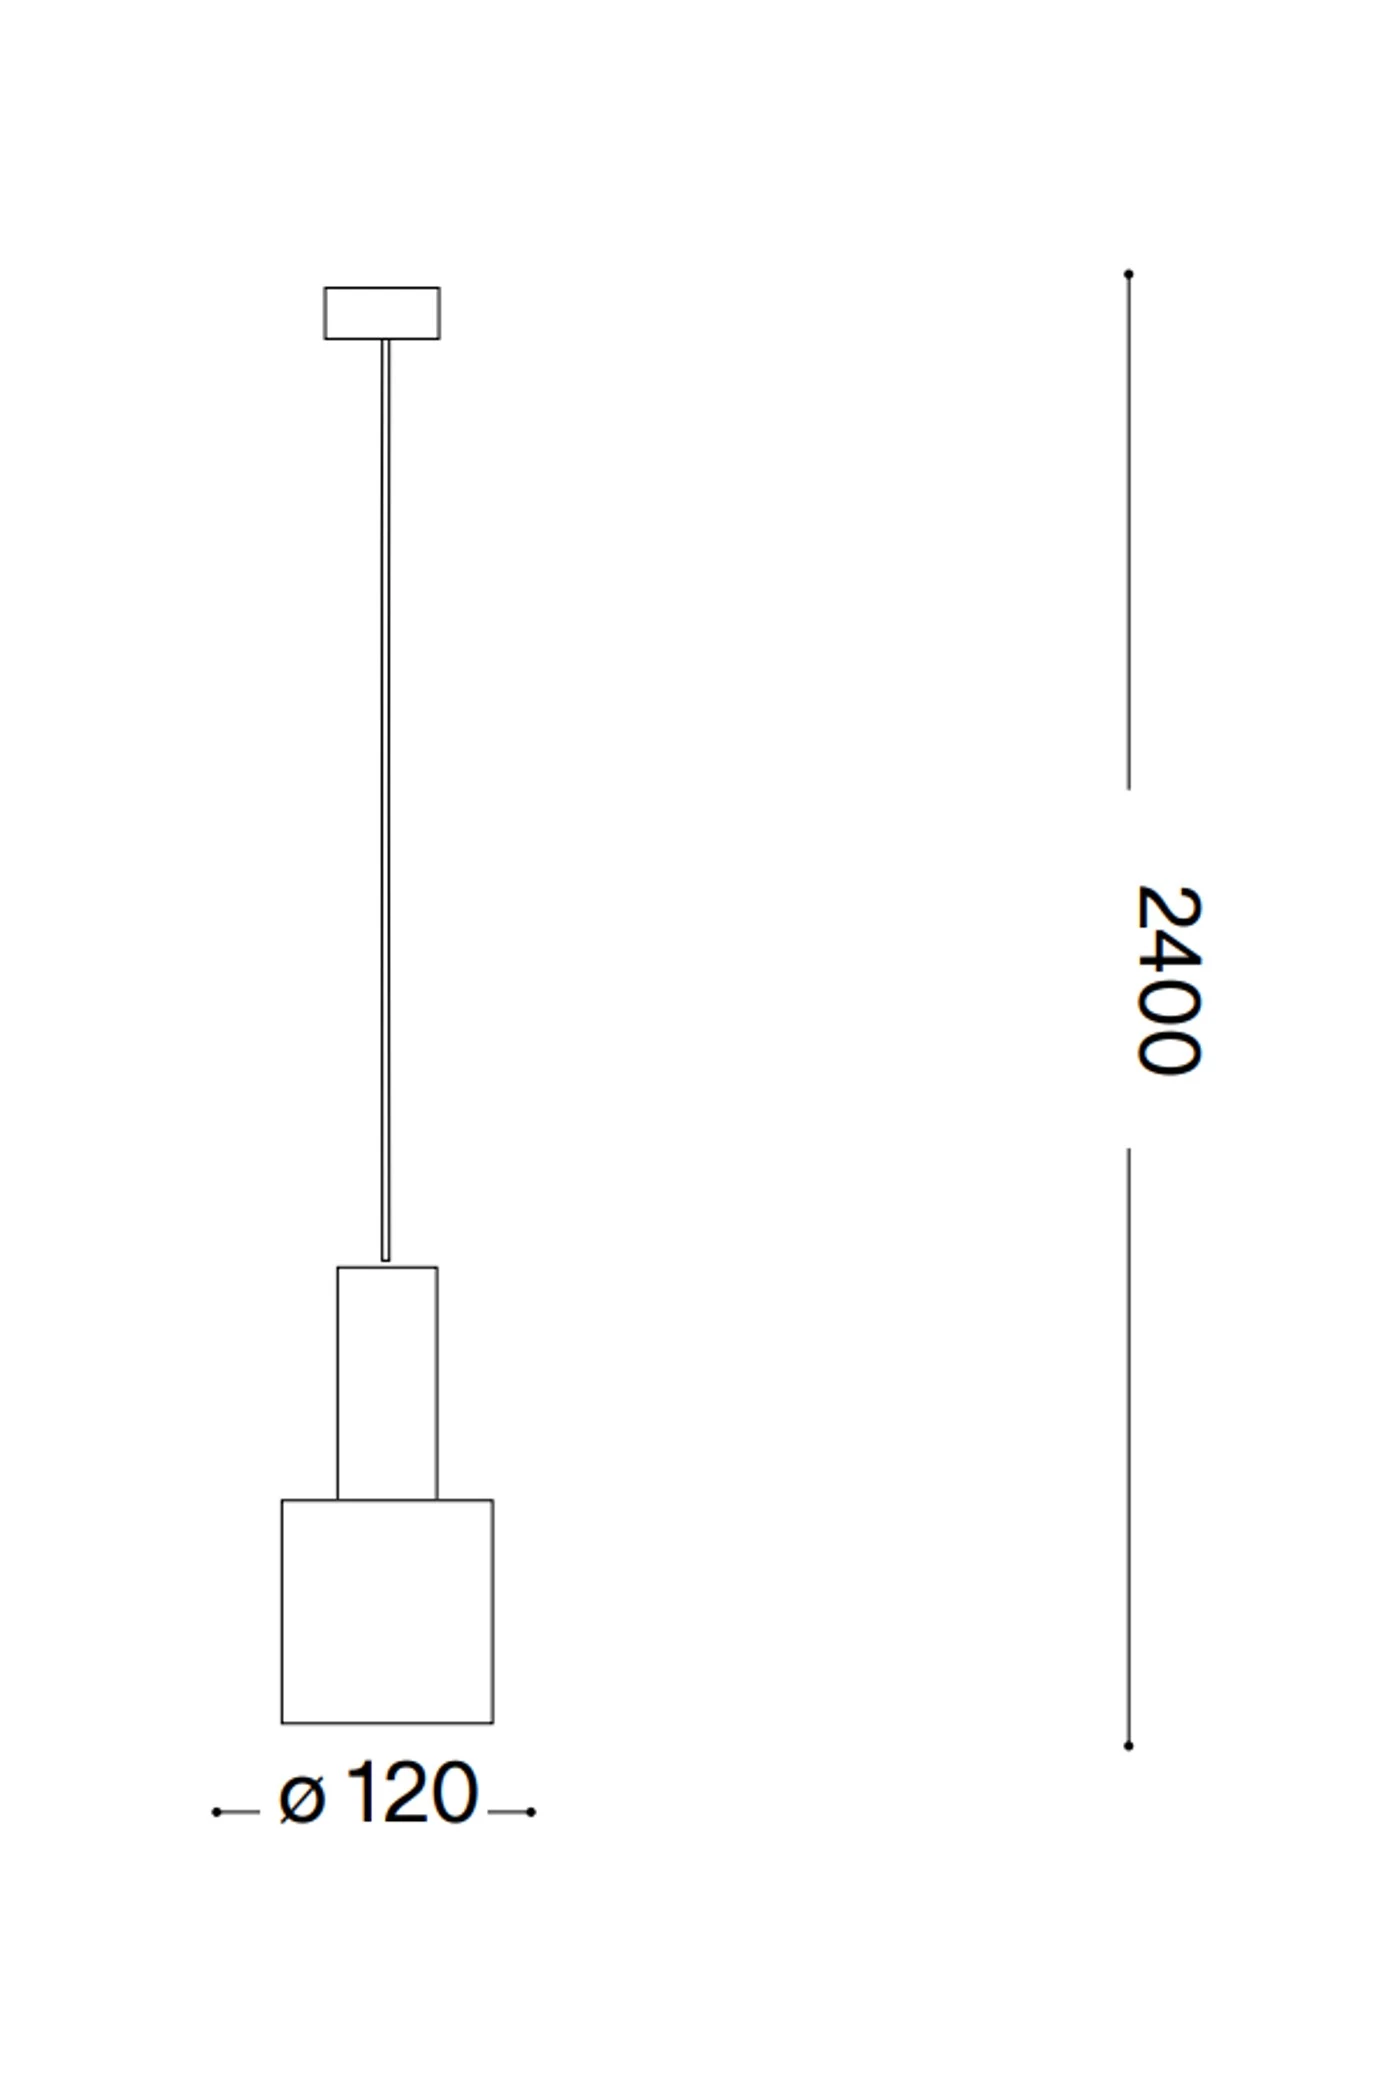   
                        
                        Люстра IDEAL LUX (Италия) 43869    
                         в стиле Лофт.  
                        Тип источника света: светодиодная лампа, сменная.                         Форма: Цилиндр.                         Цвета плафонов и подвесок: Латунь.                         Материал: Металл.                          фото 2